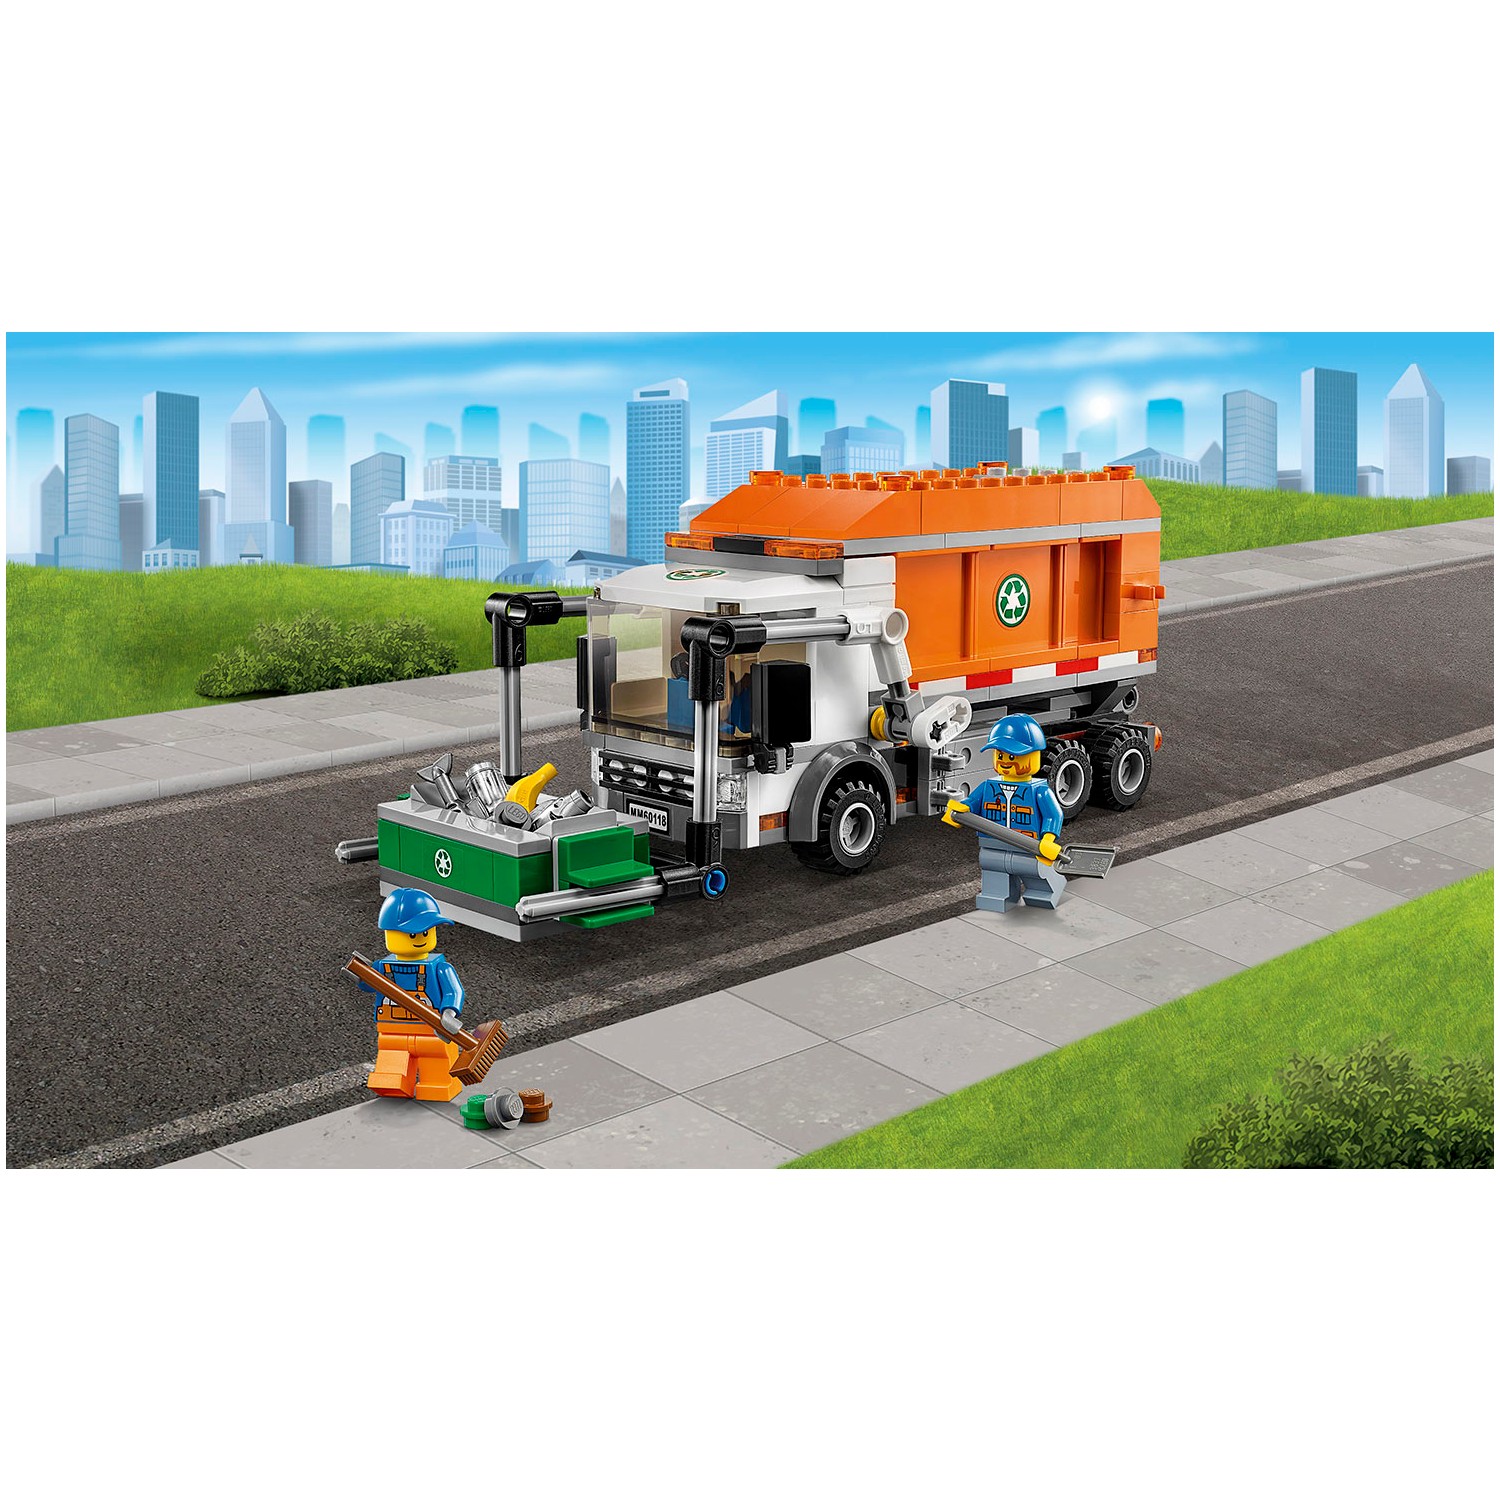 lego city garbage truck 60118 amazon